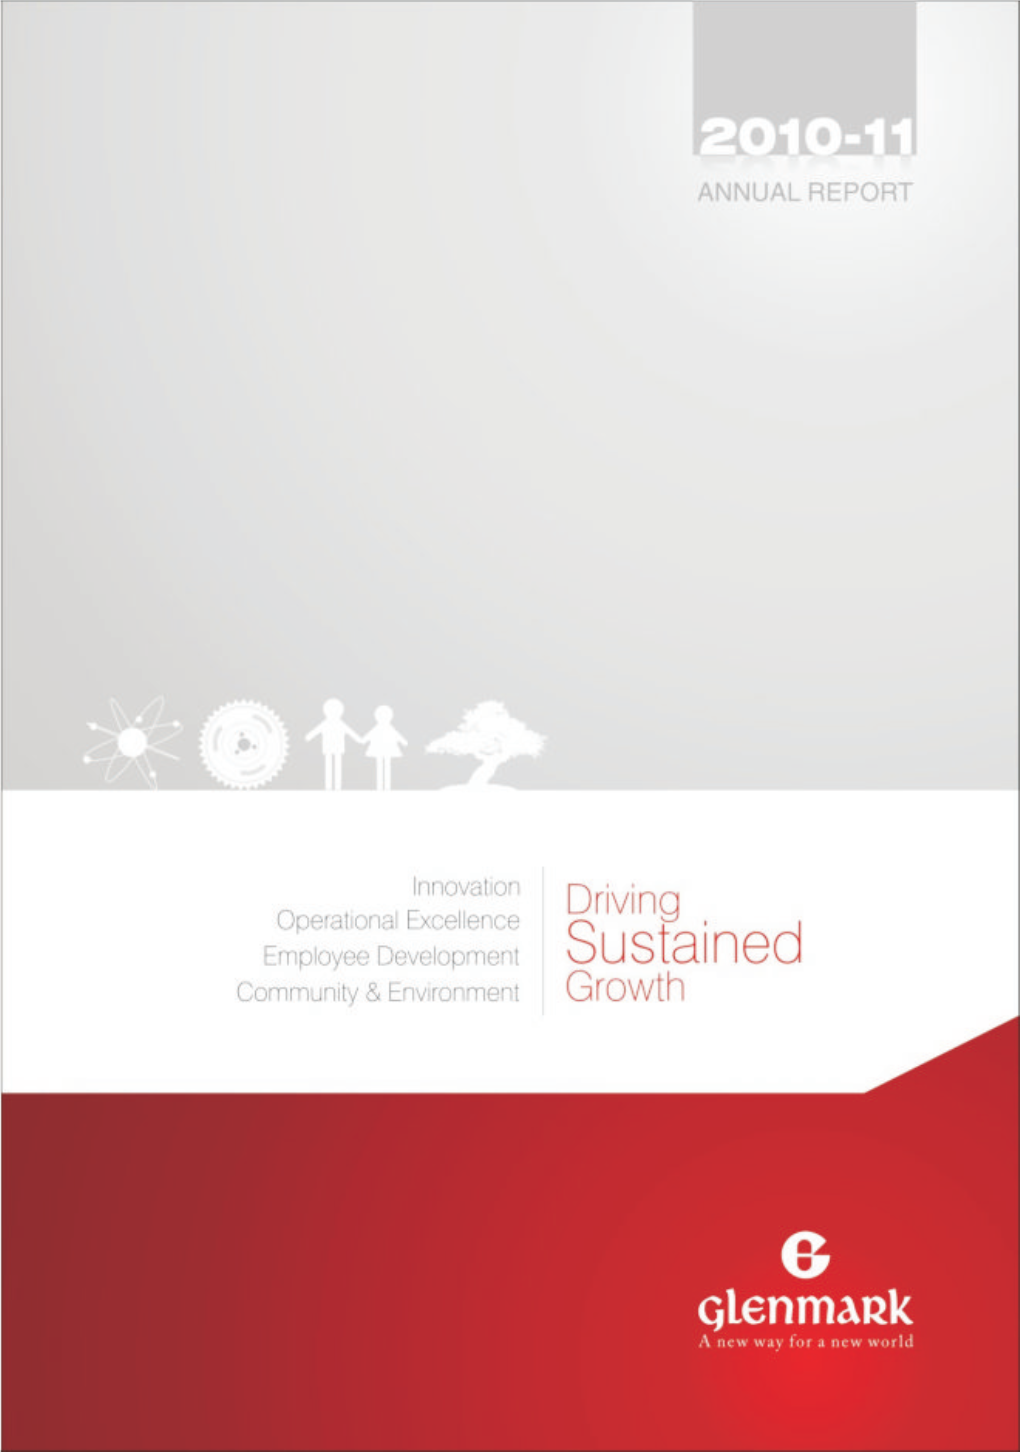 Annual Report FY 2010-11.Pdf